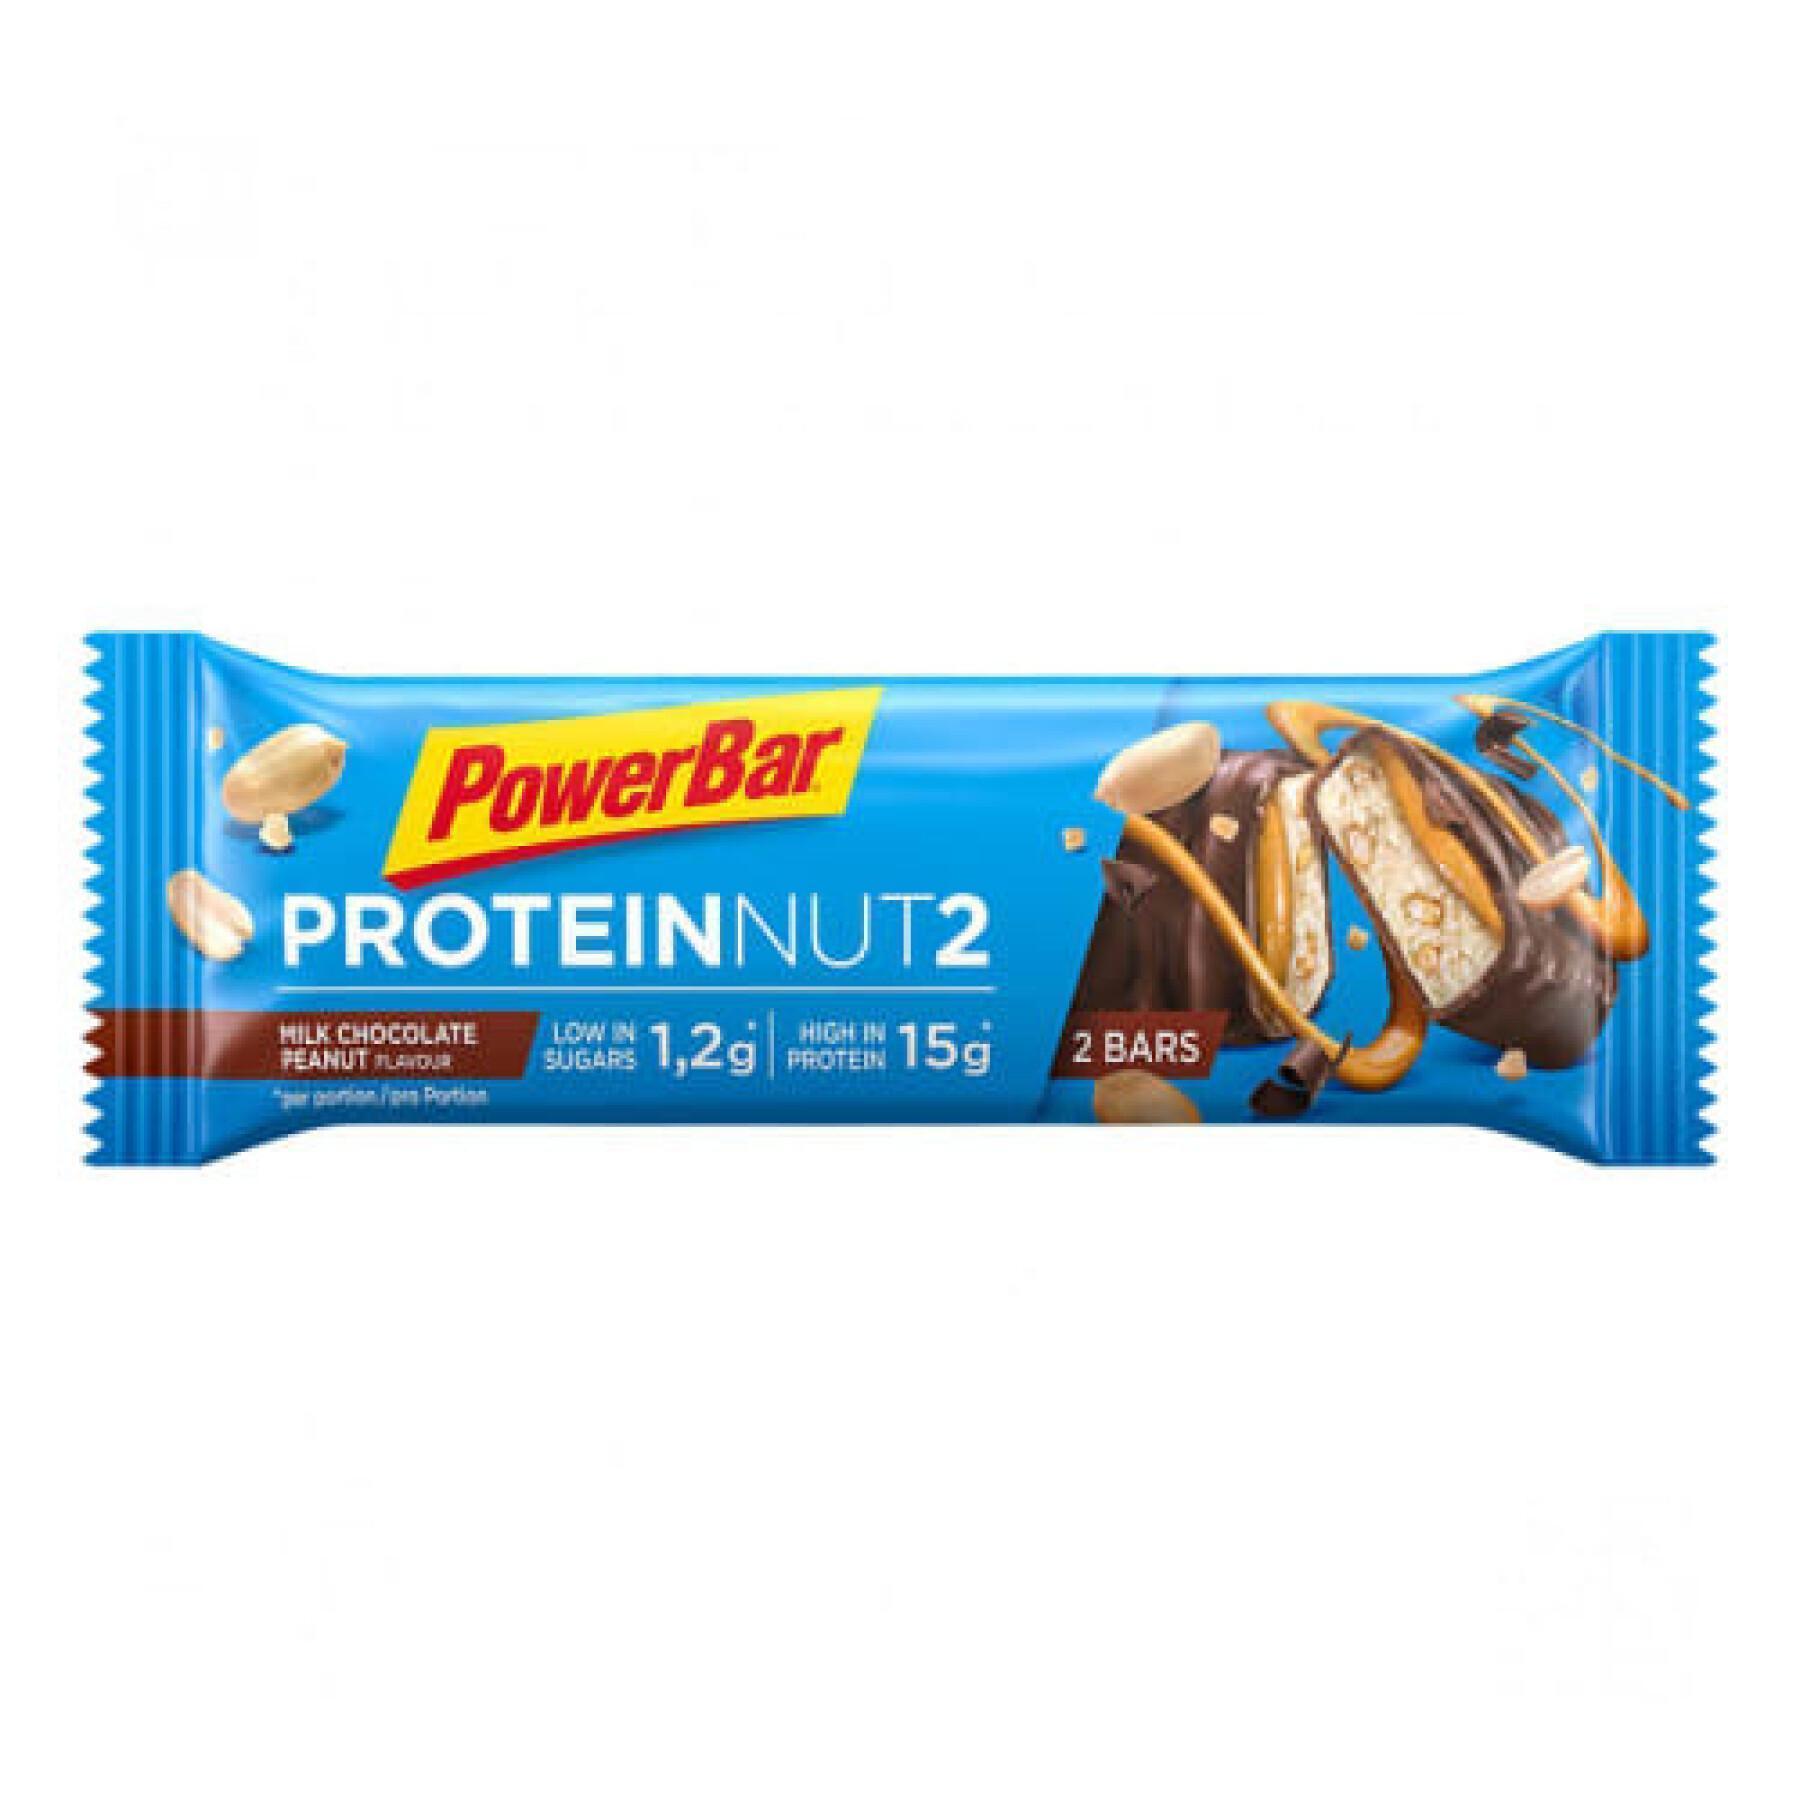 Paquete de 18 barras PowerBar Protein Nut2 - Milk Chocolate Peanut